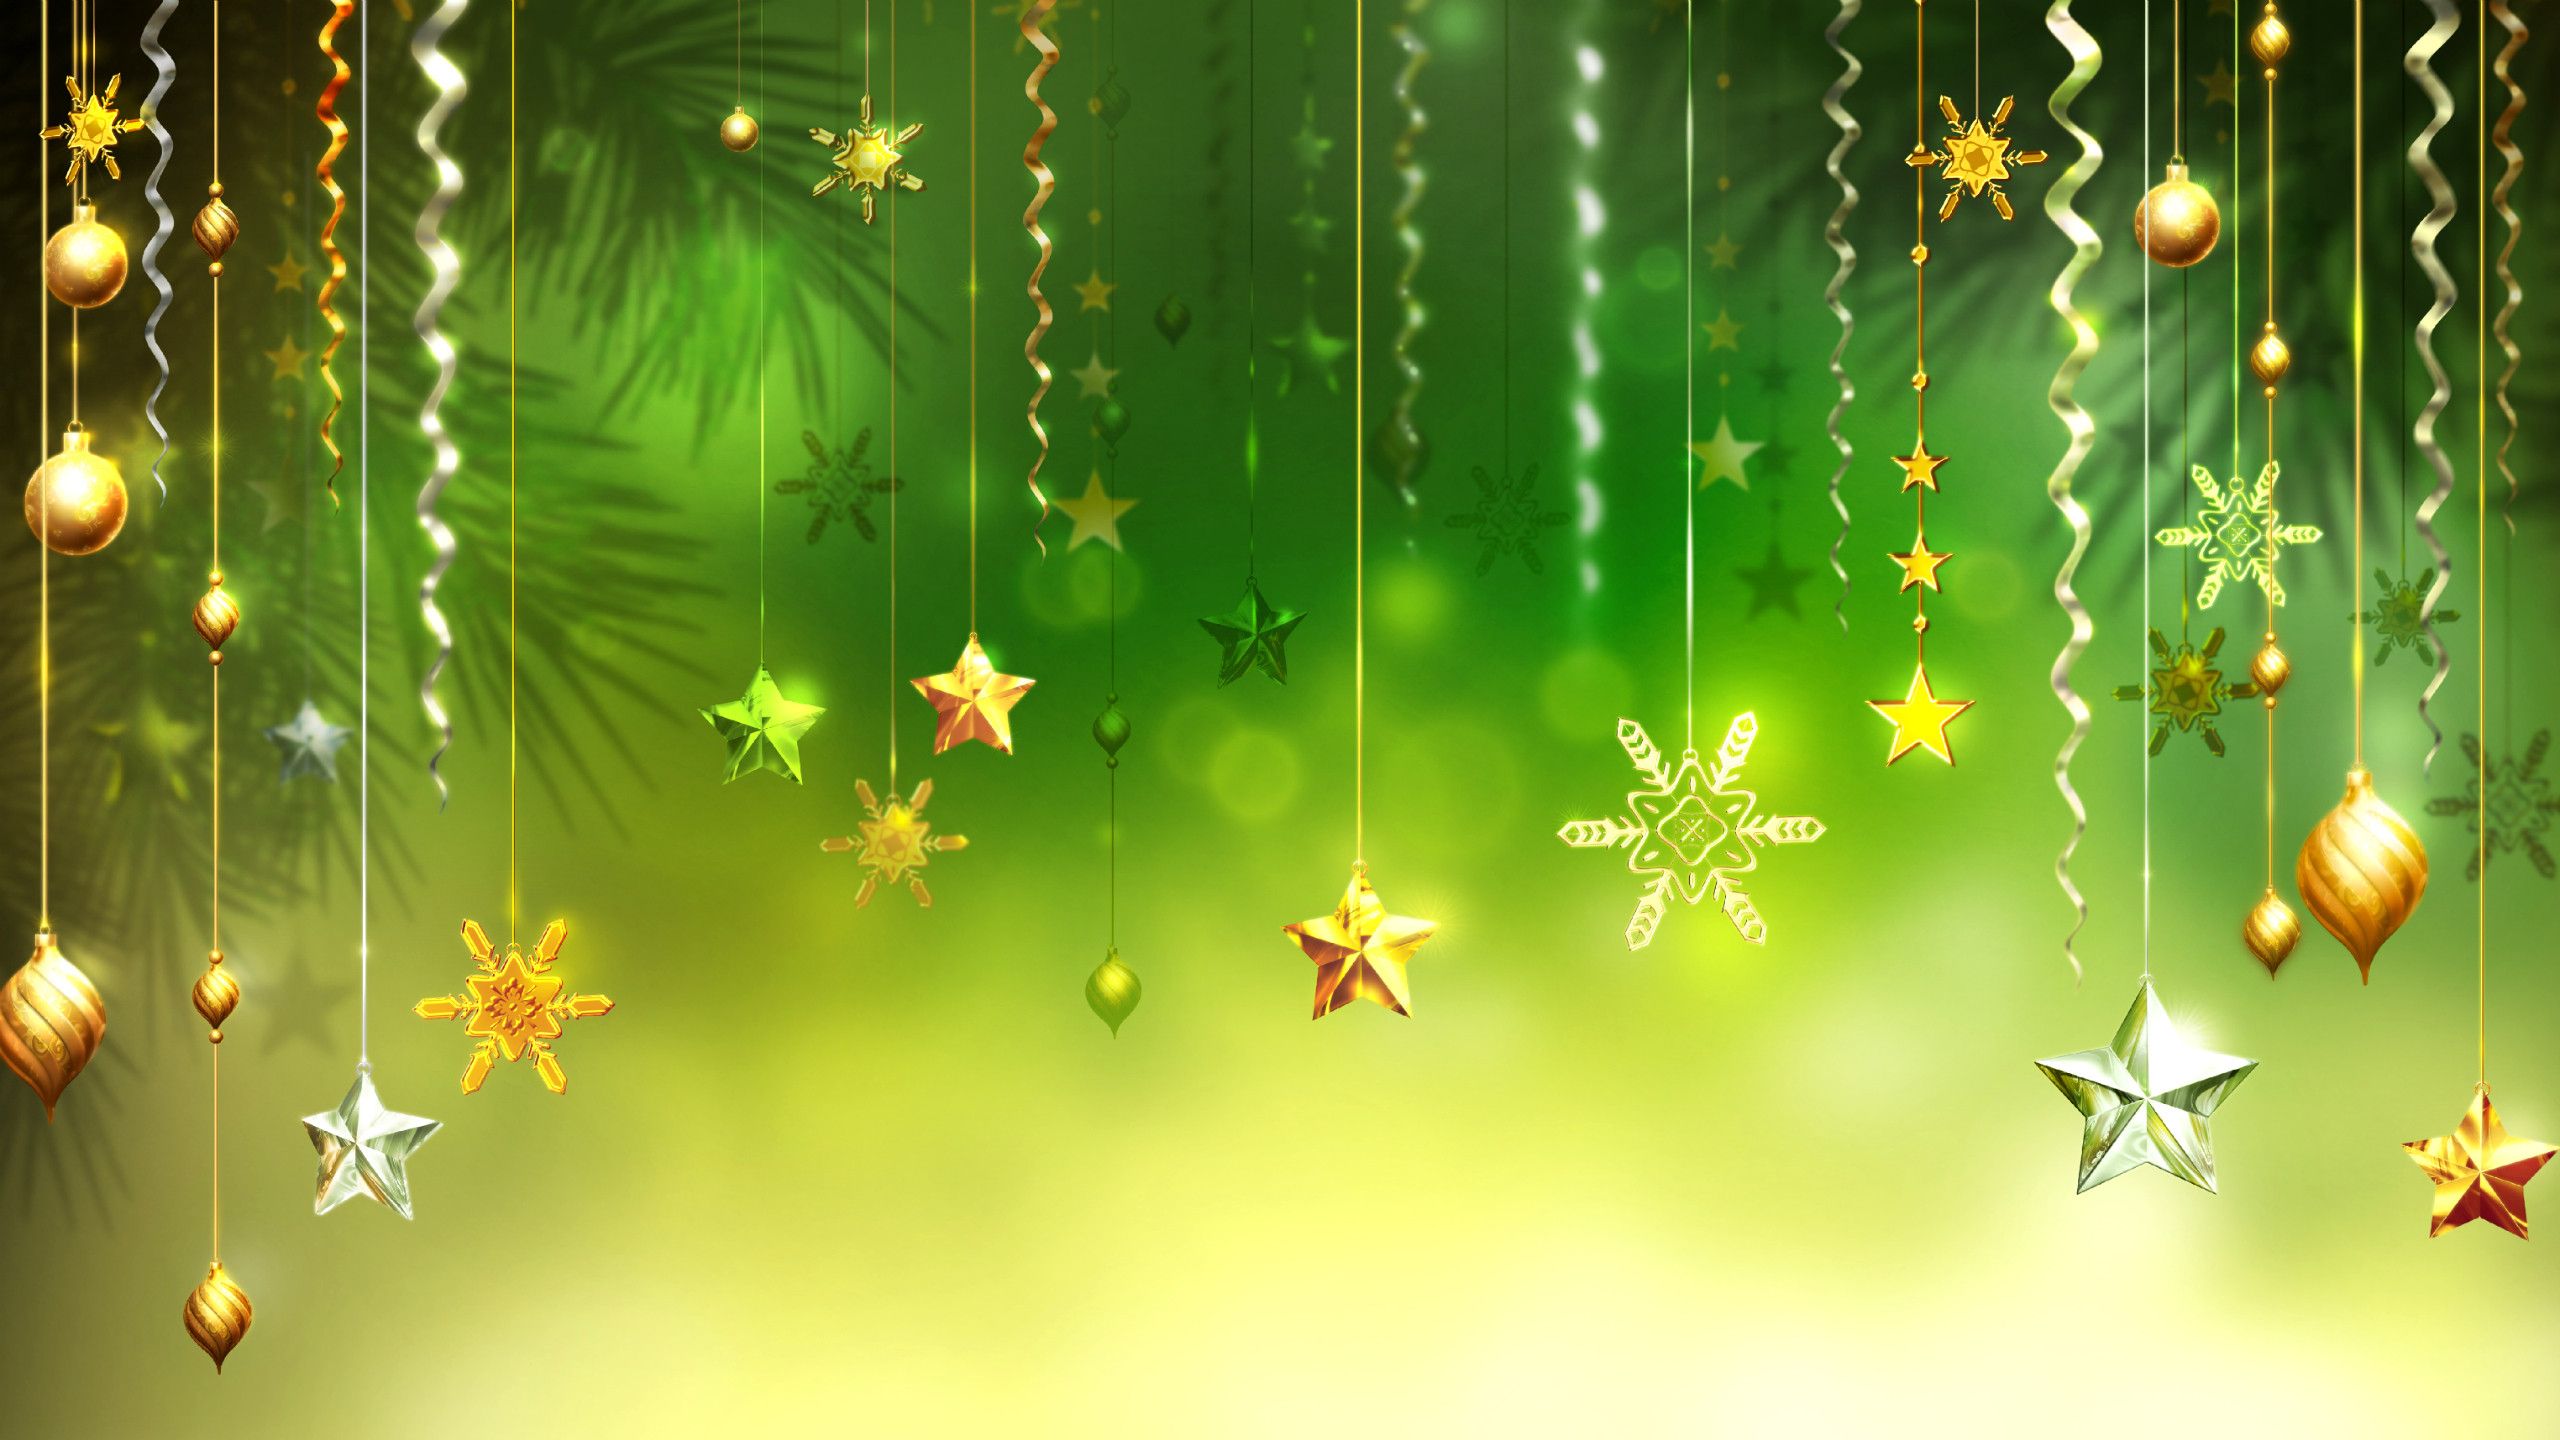 2015 Christmas Image background - desktop, wallpapers, images